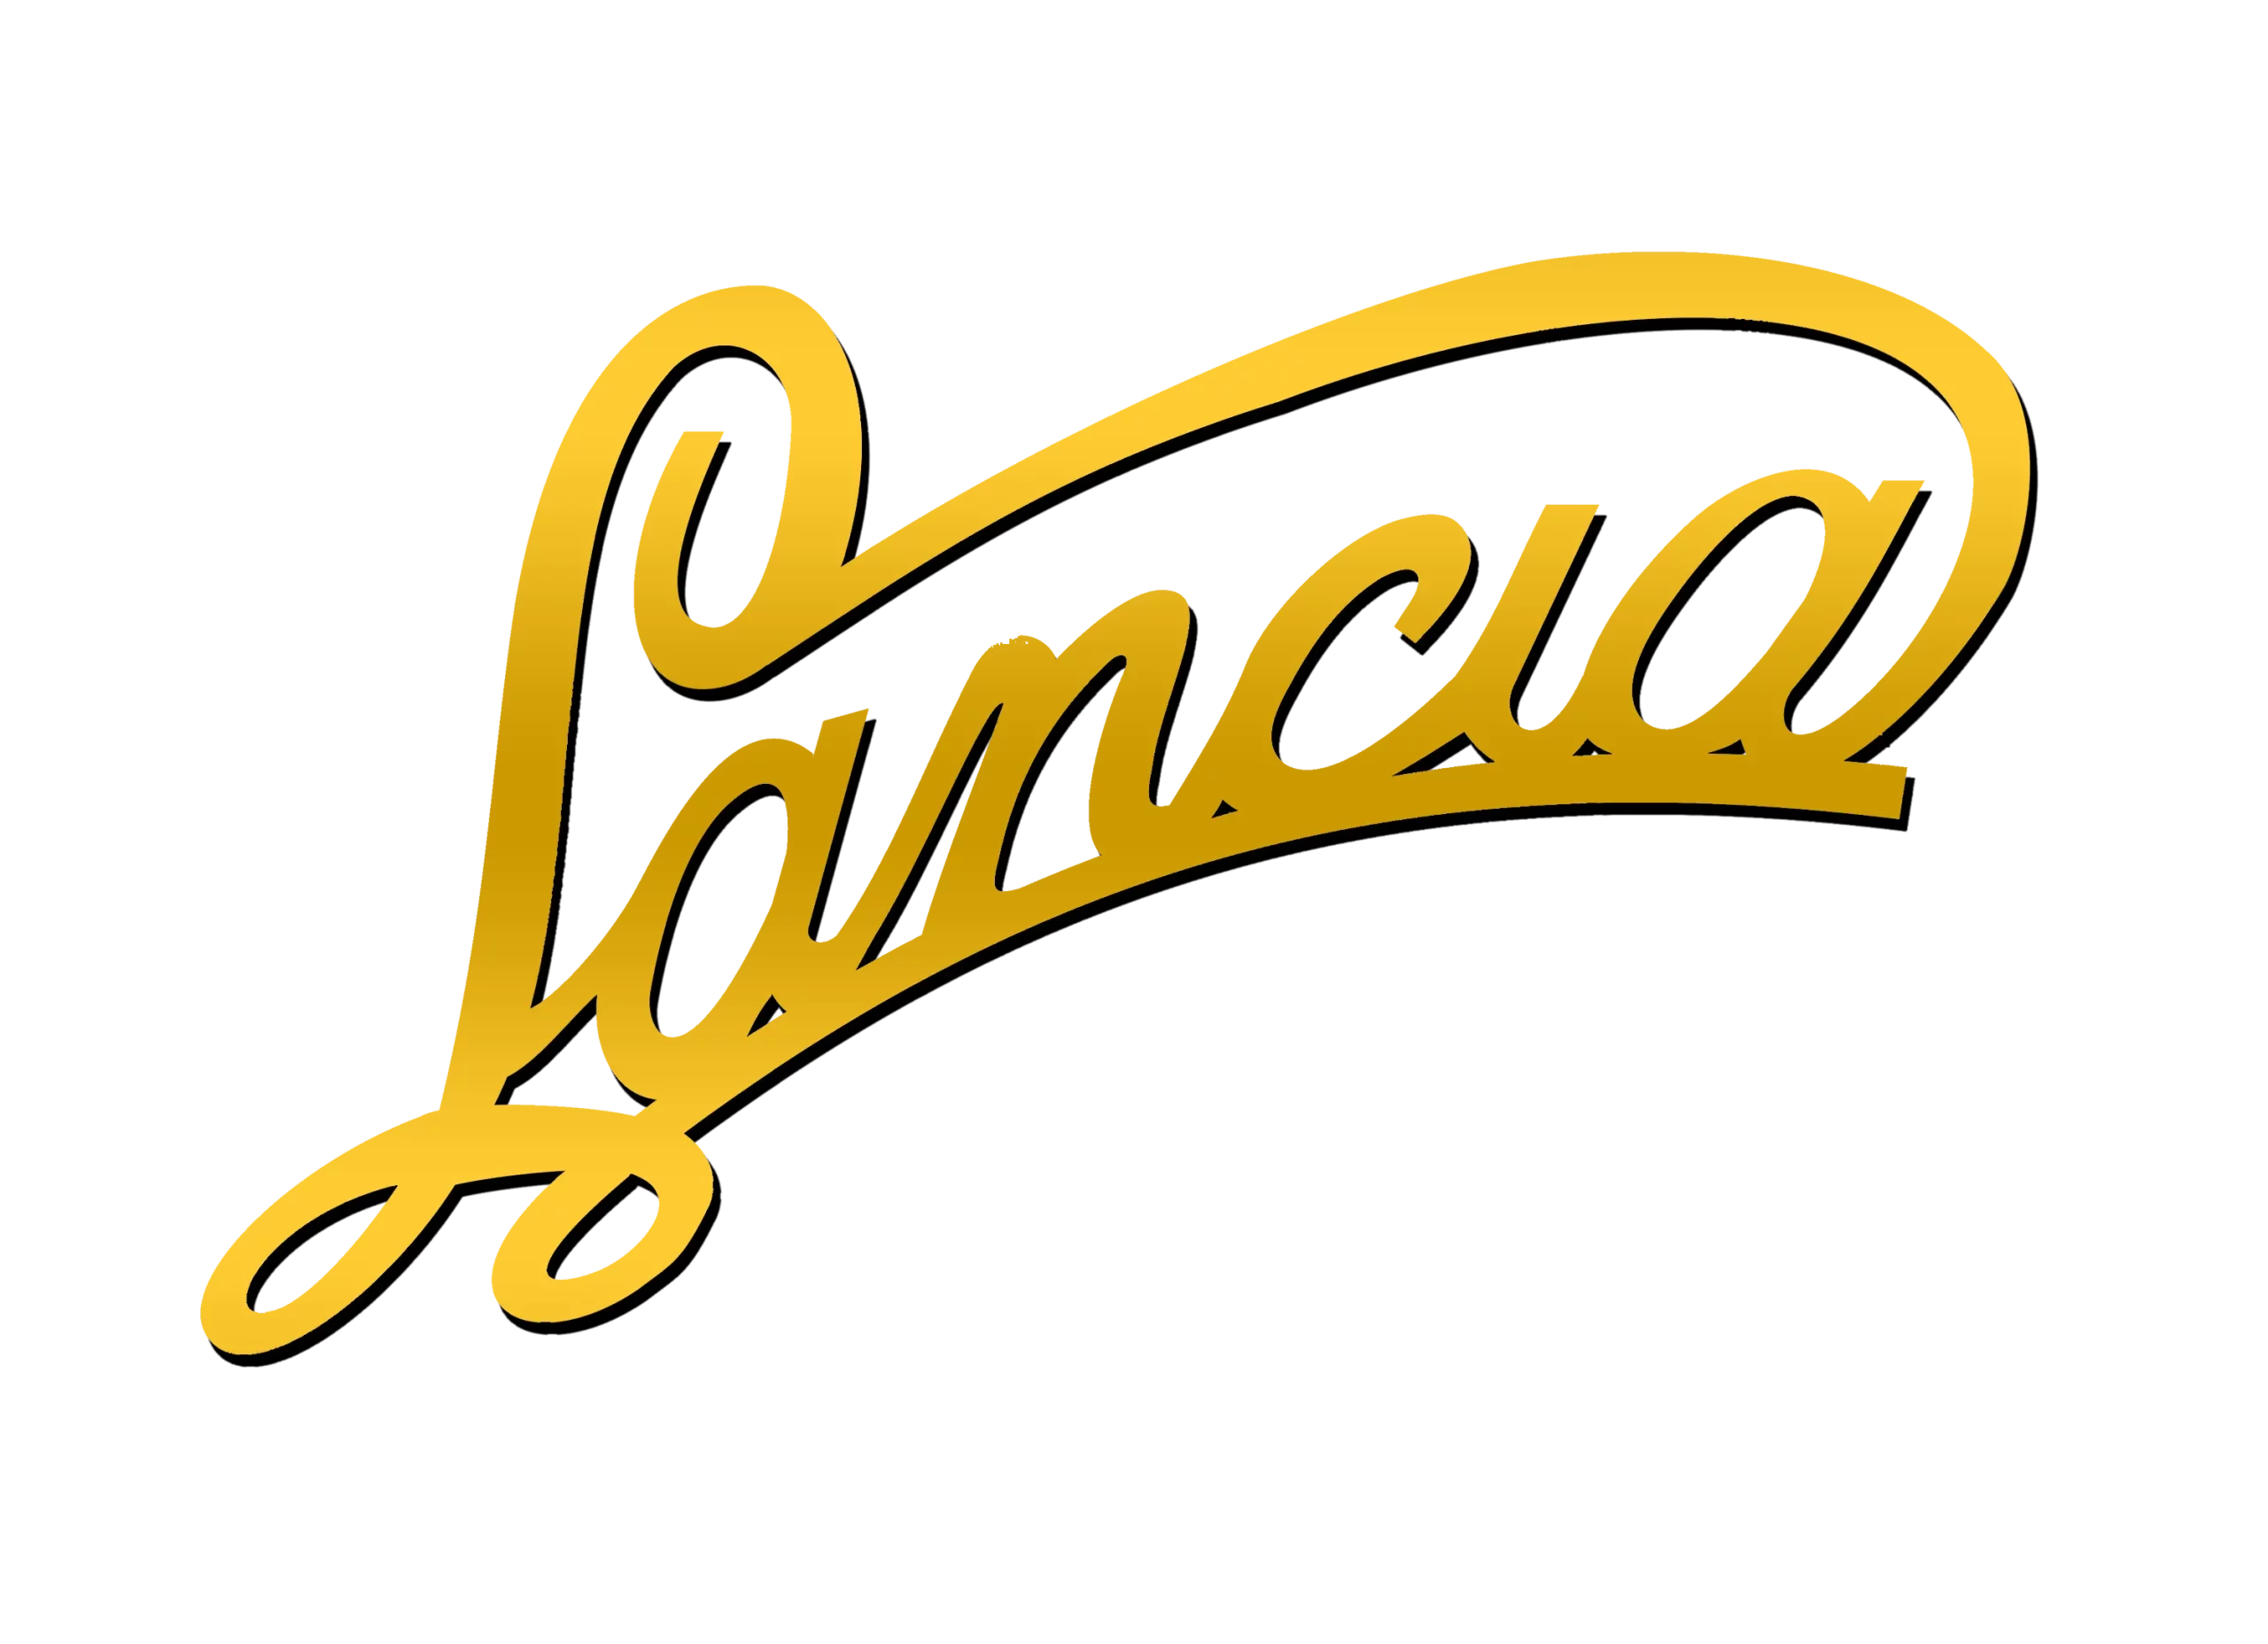 Lancia logo 1907-1911